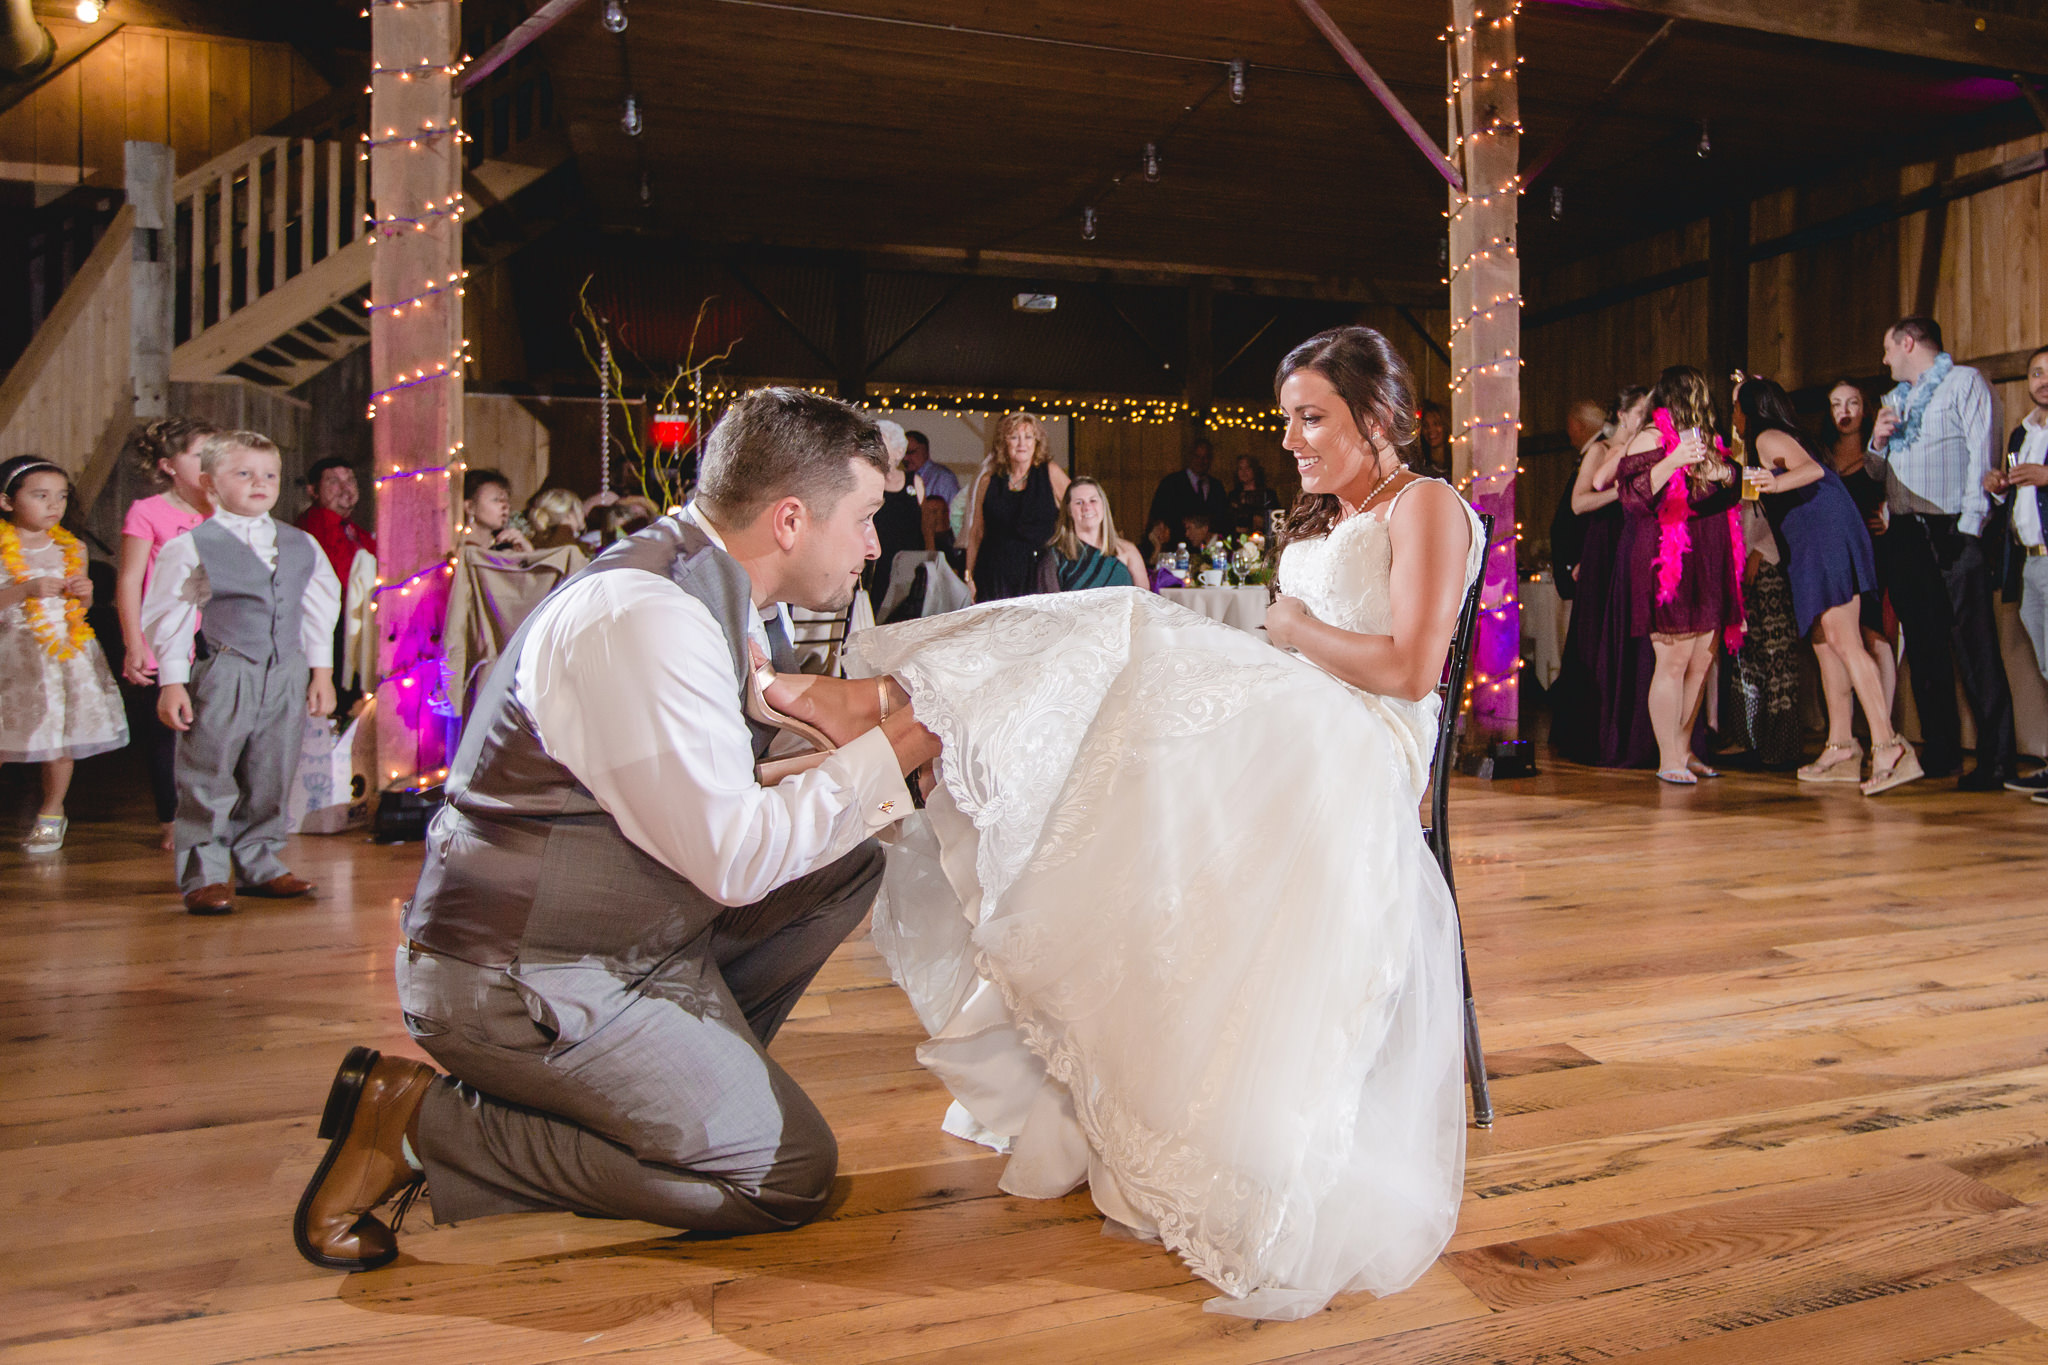 Groom removes the bride's garter at their White Barn wedding